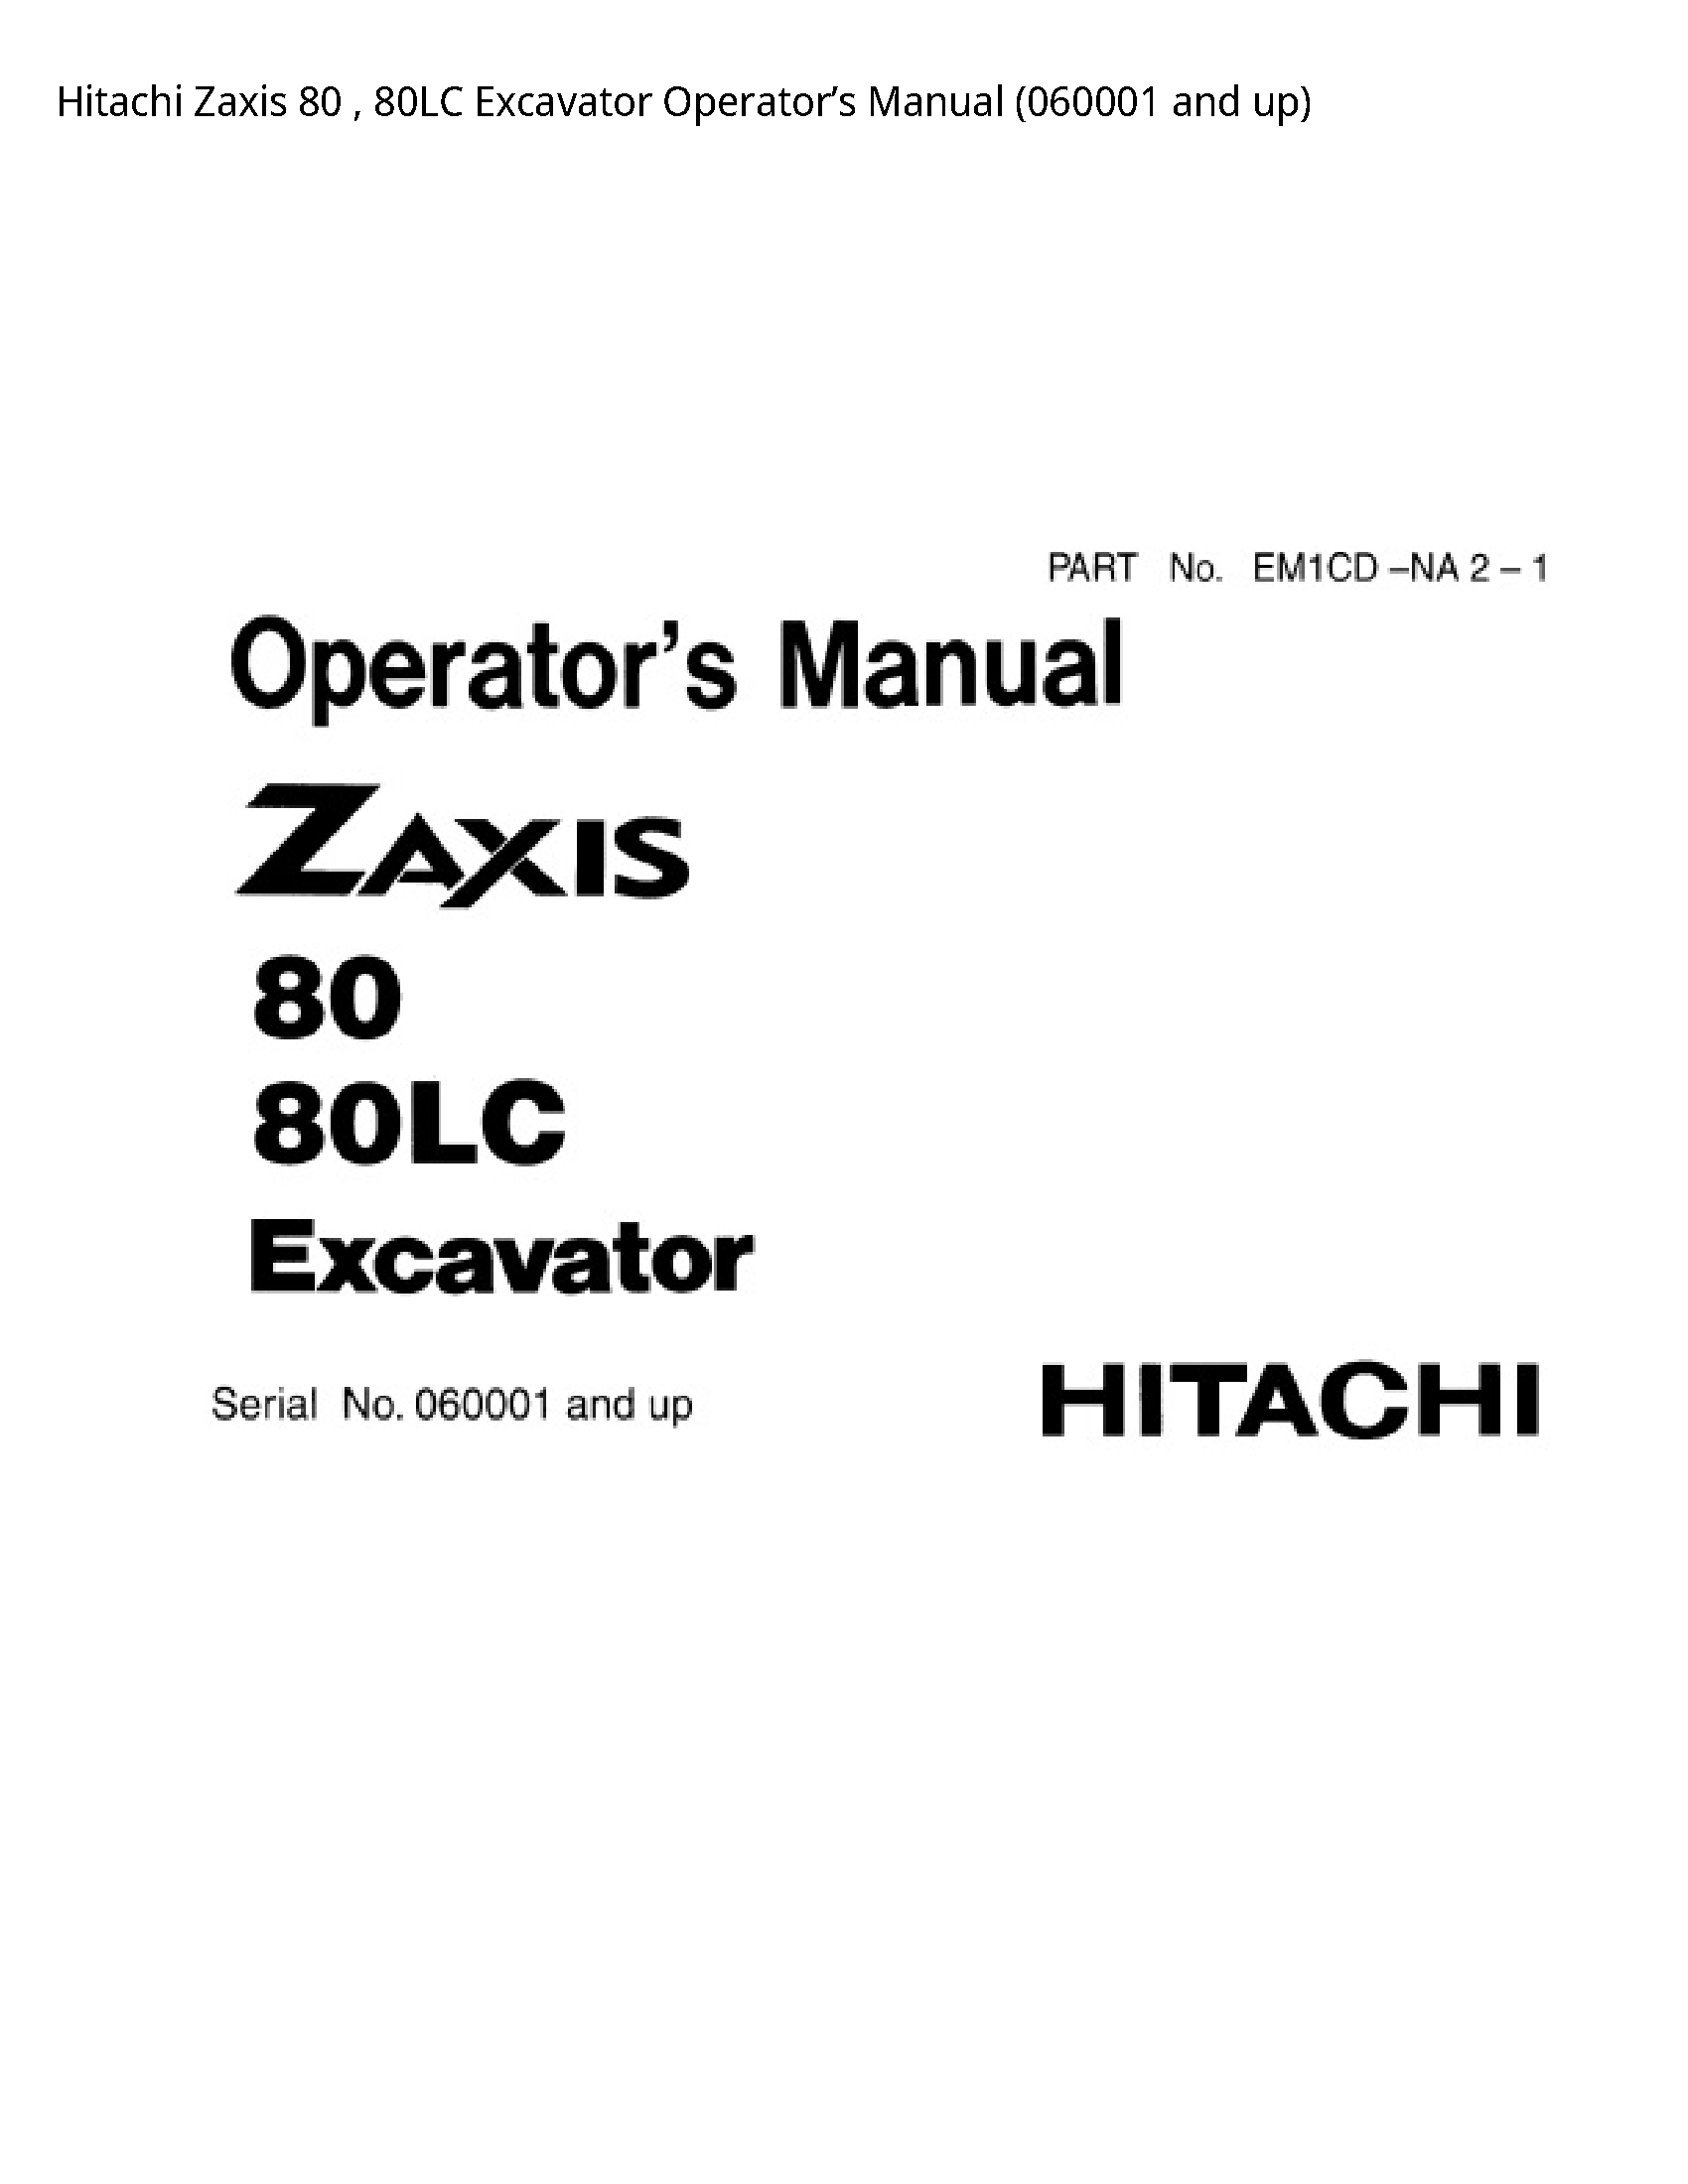 Hitachi 80 Zaxis Excavator Operator’s manual